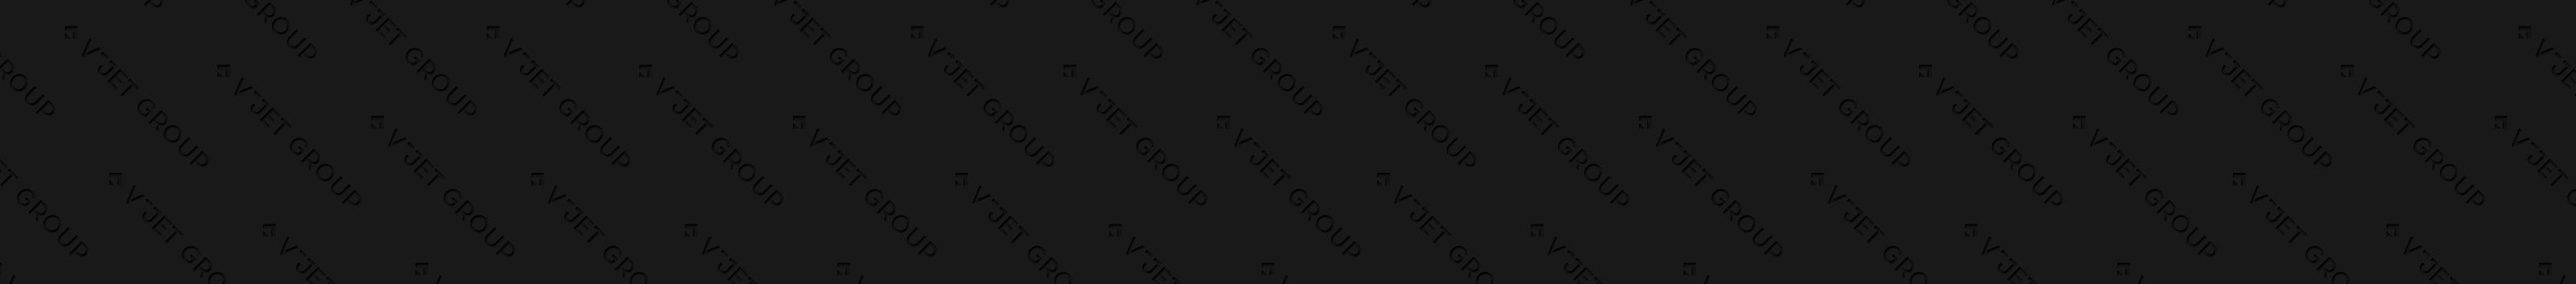 v-jet group's profile banner